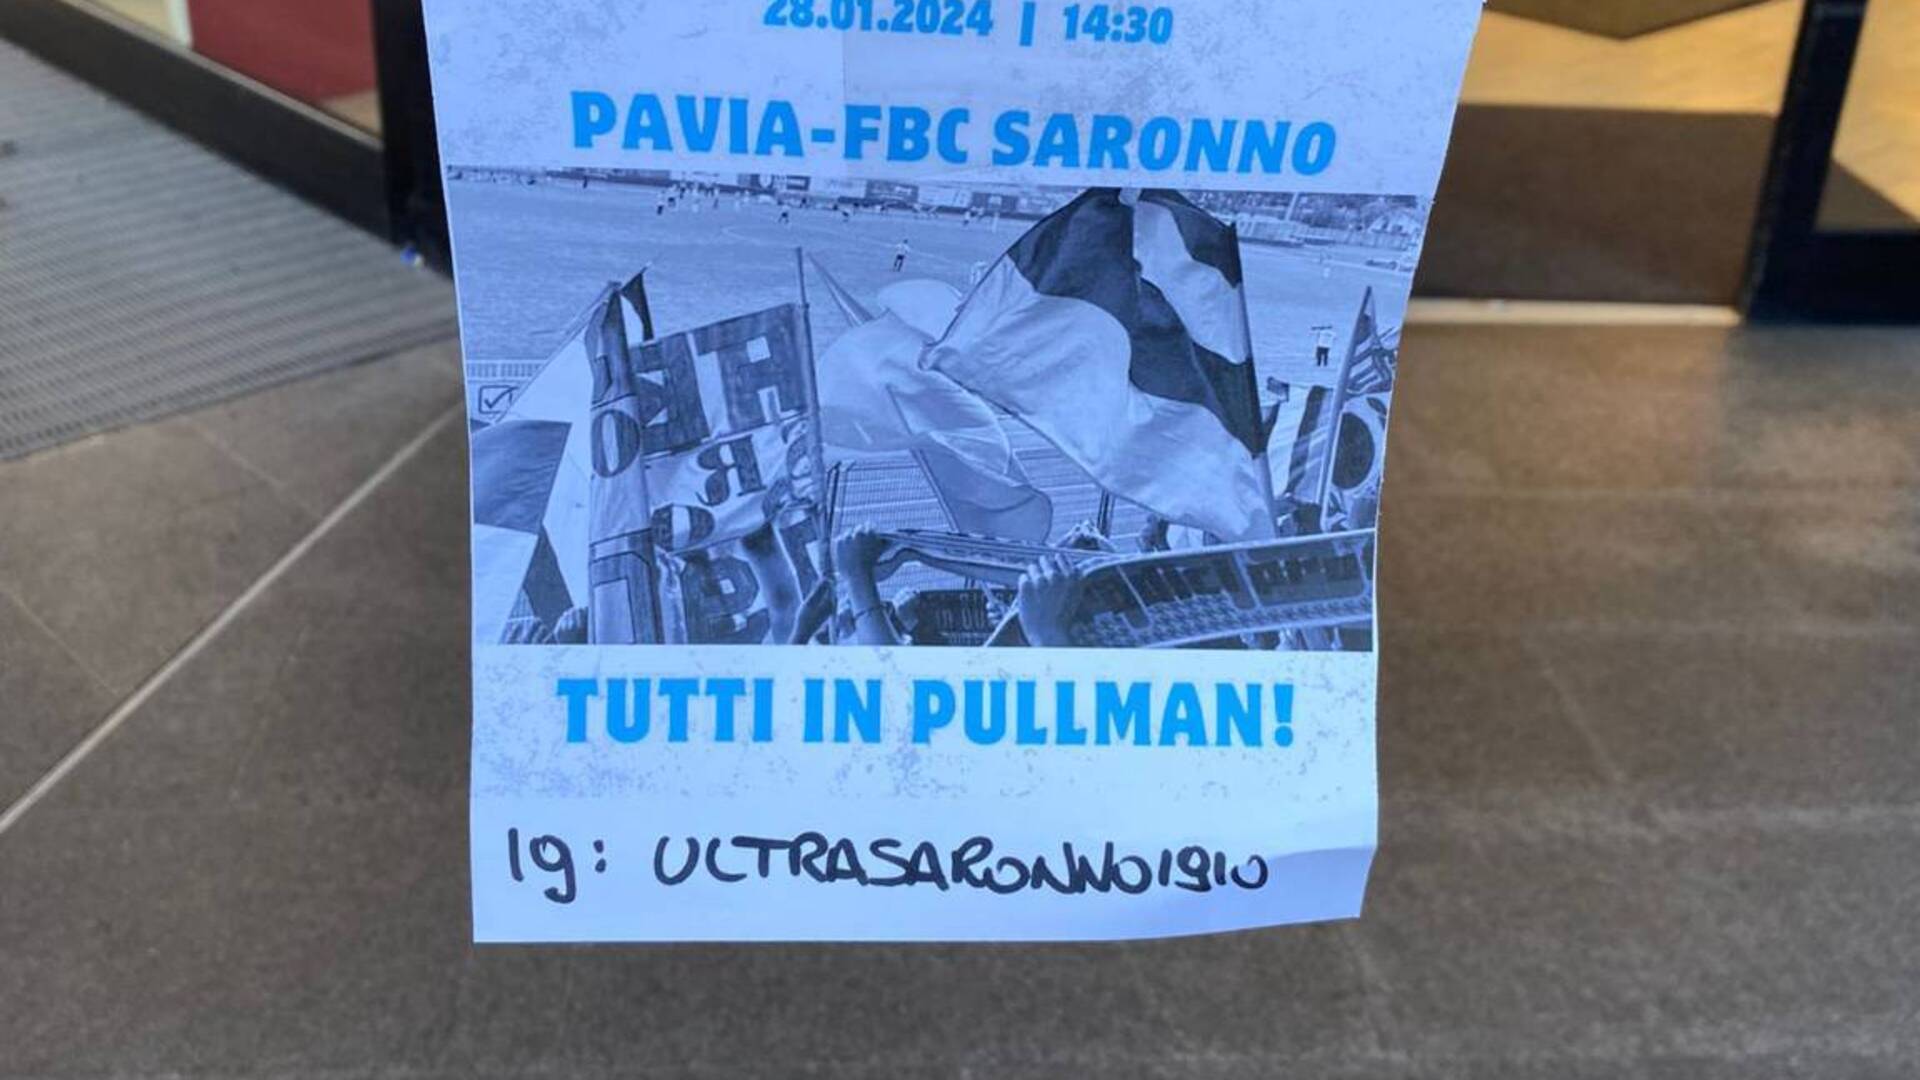 Calcio, per Pavia-Fbc Saronno tornano i bus dei tifosi: ultras saronnesi mobilitati